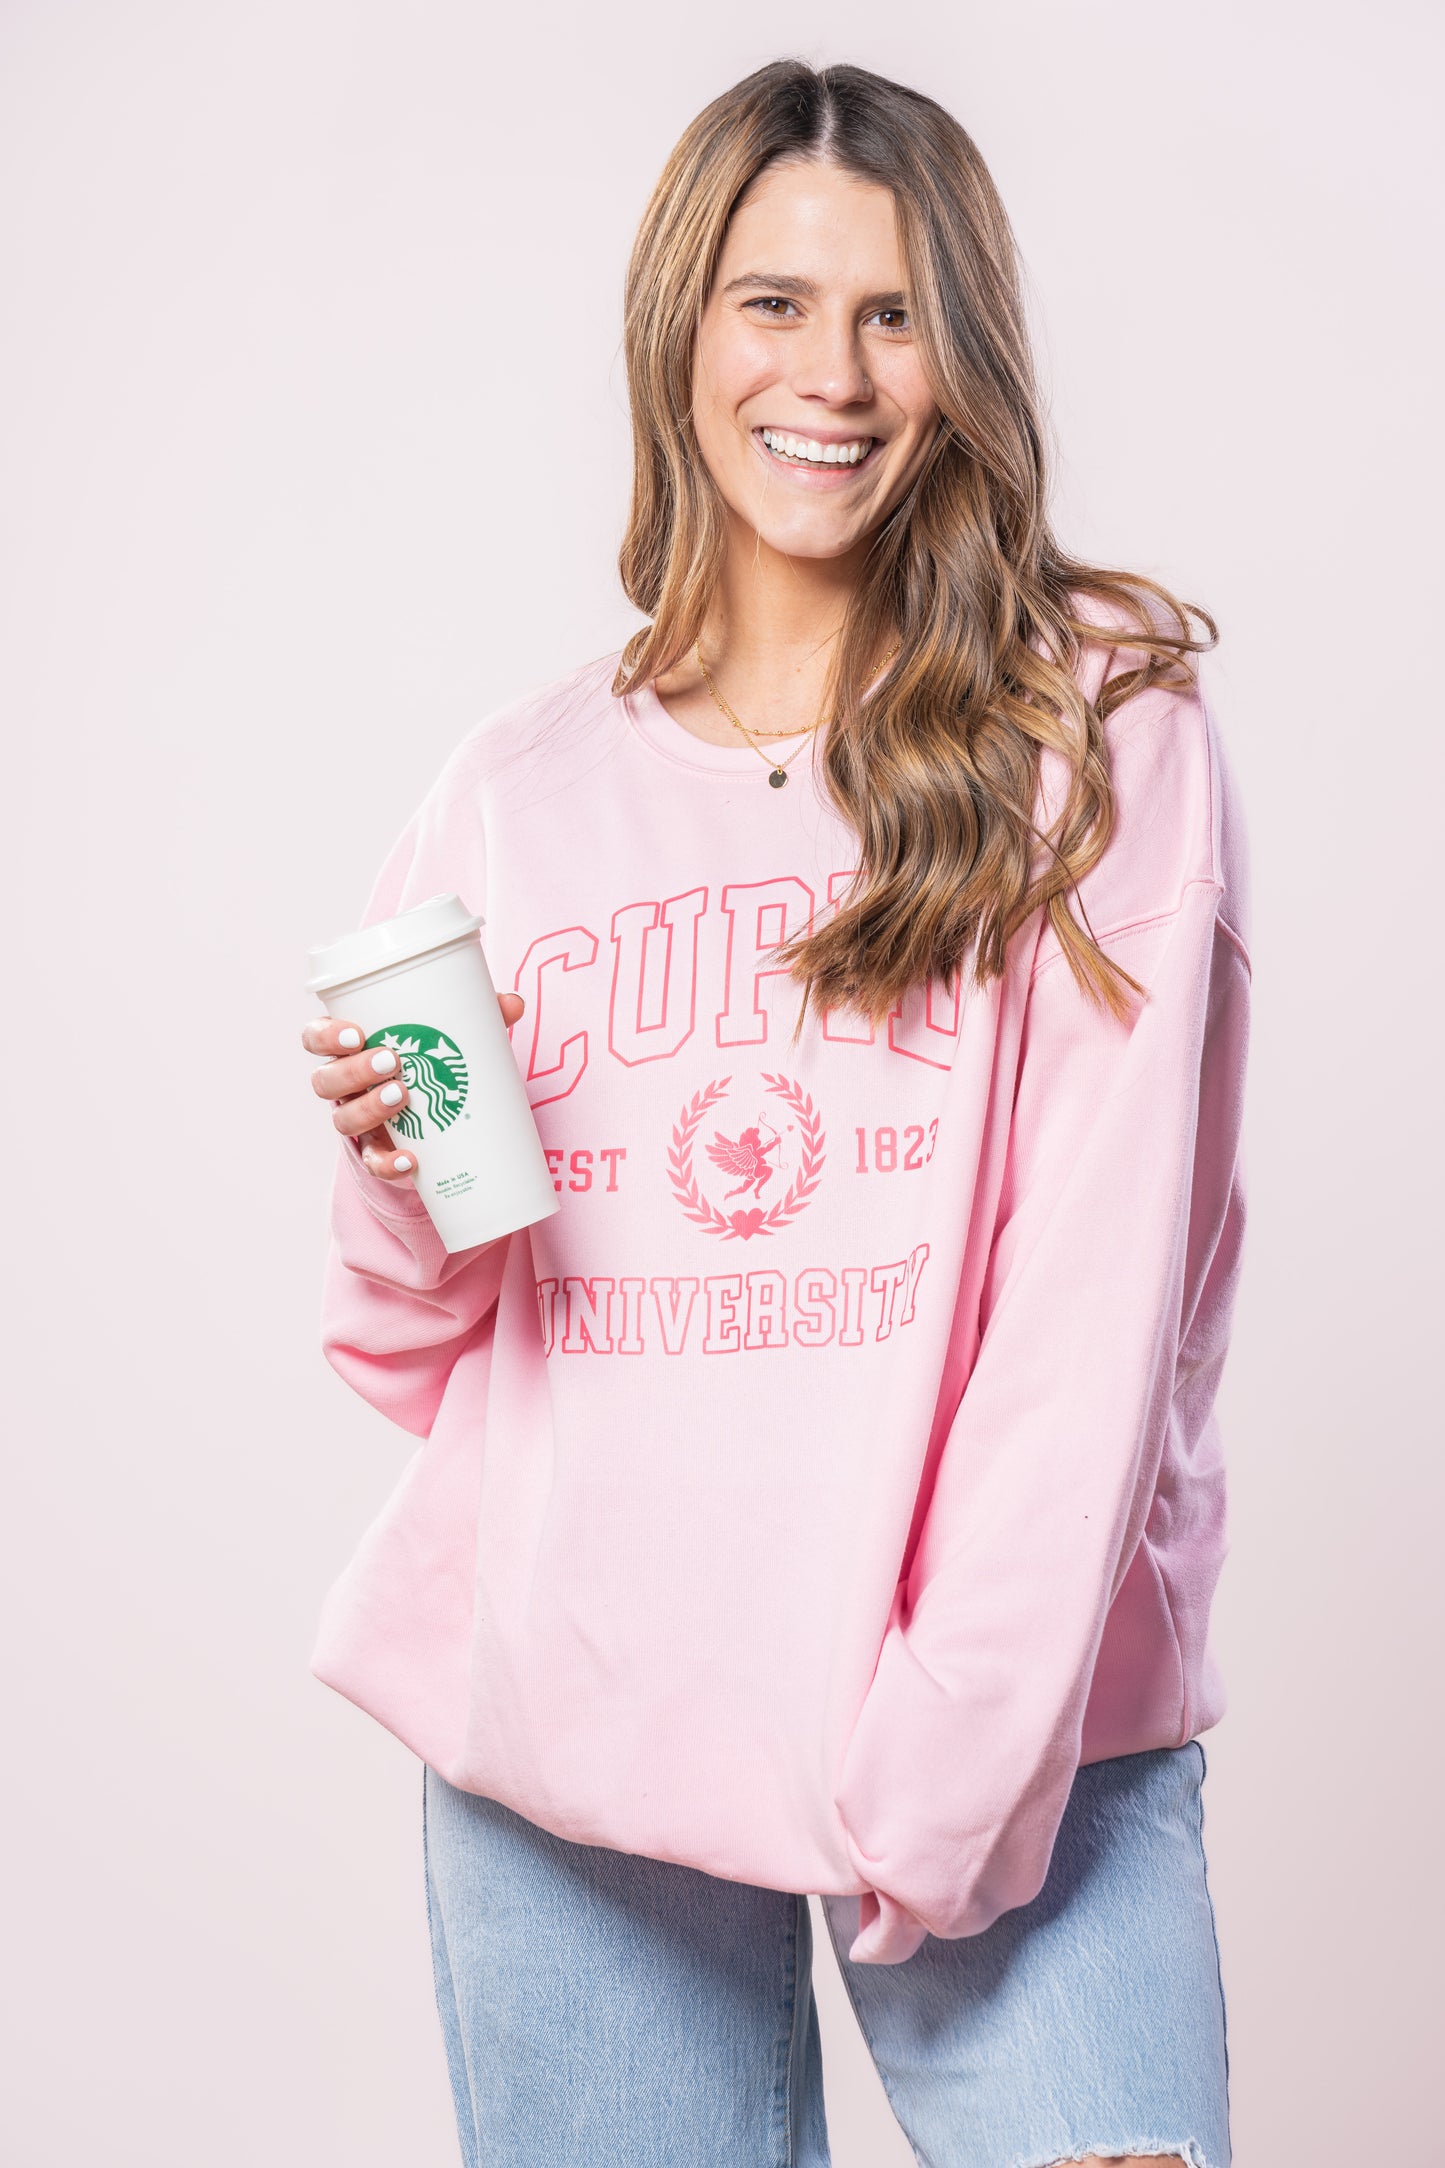 Cupid University - Sweatshirt (Light Pink)